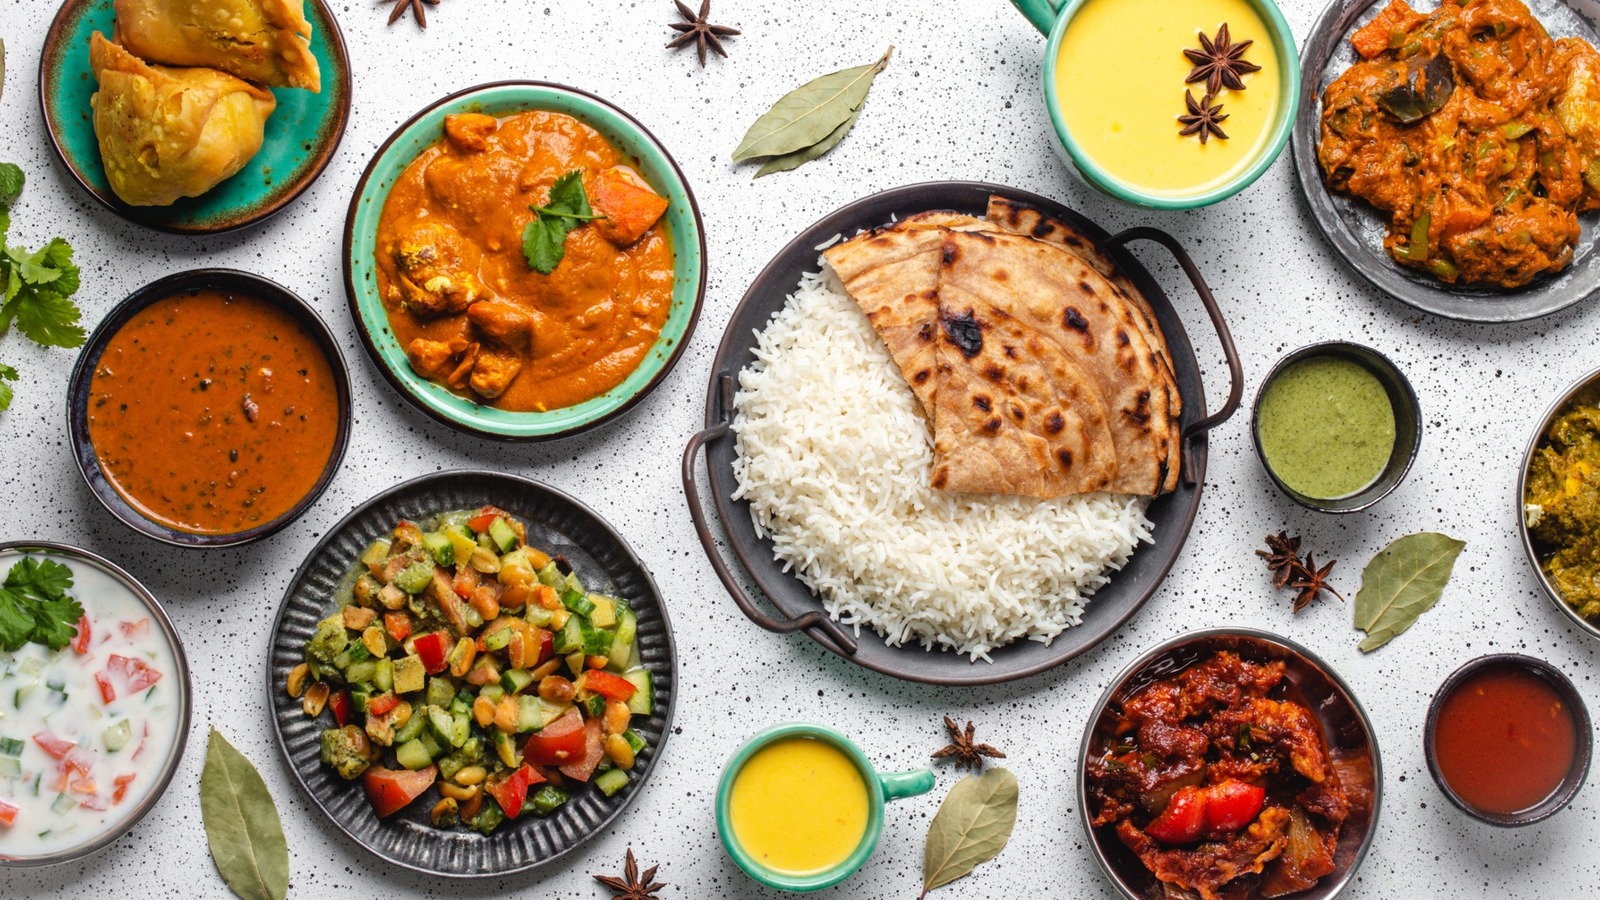 15 Best Indian Restaurants In NYC, Ranked